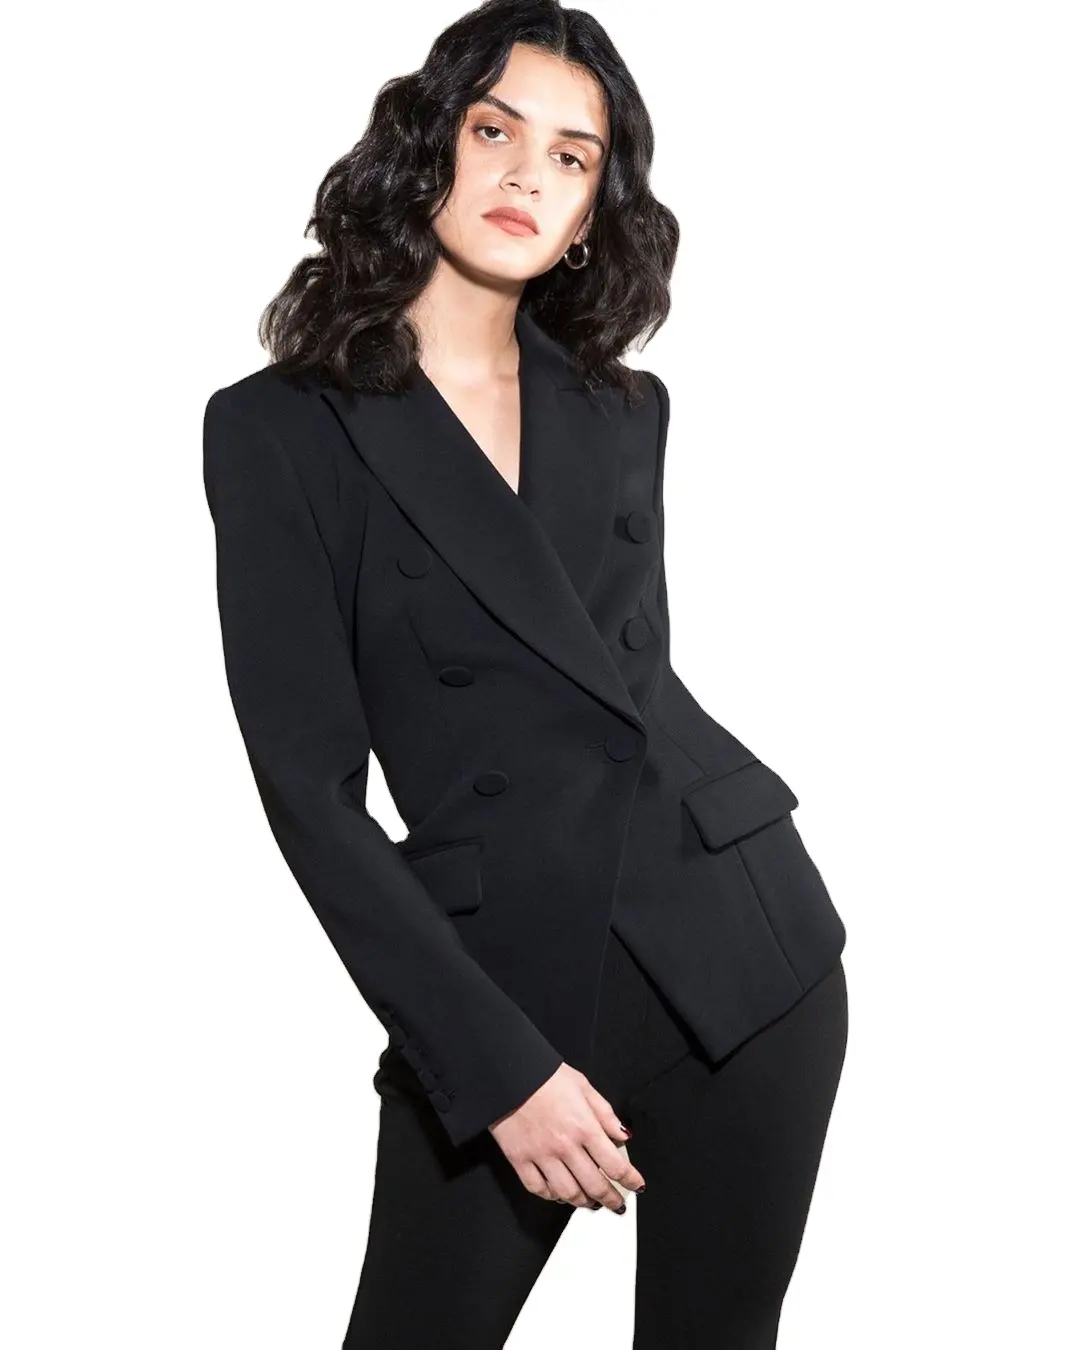 Women Black Suit Casual Formal Office Wear Elegant Ladies Two Piece Set Suits